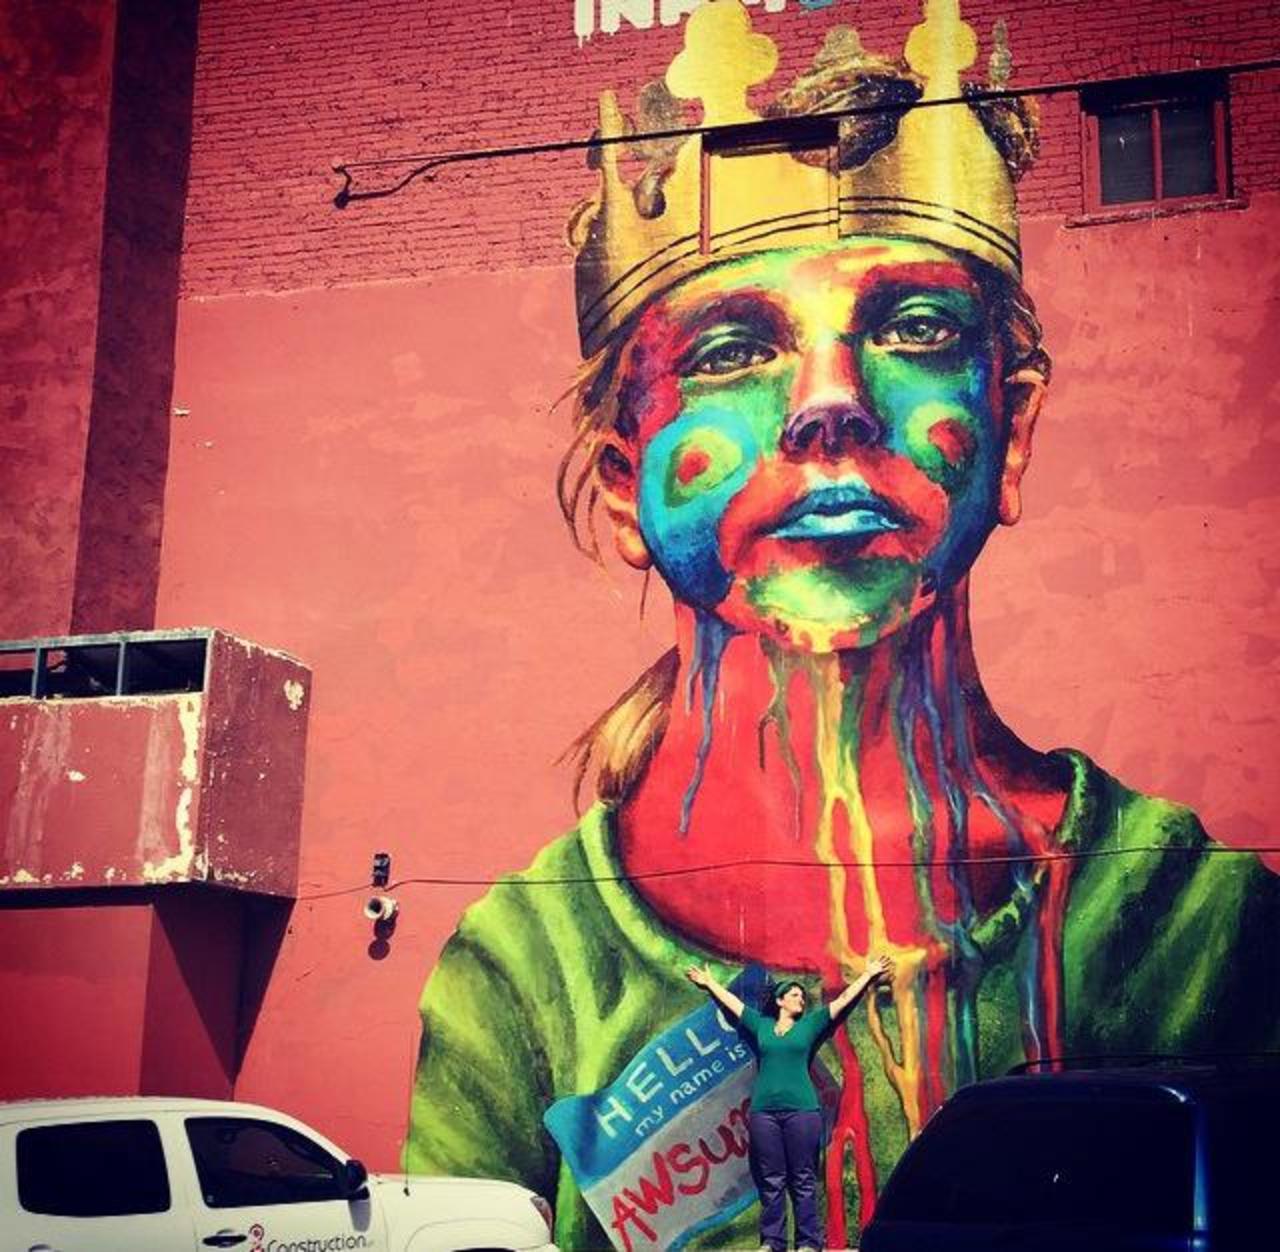 Street Art by Naomi Haverland in Denver Colorado 

#art #arte #graffiti #streetart http://t.co/UrTcm6CPXR